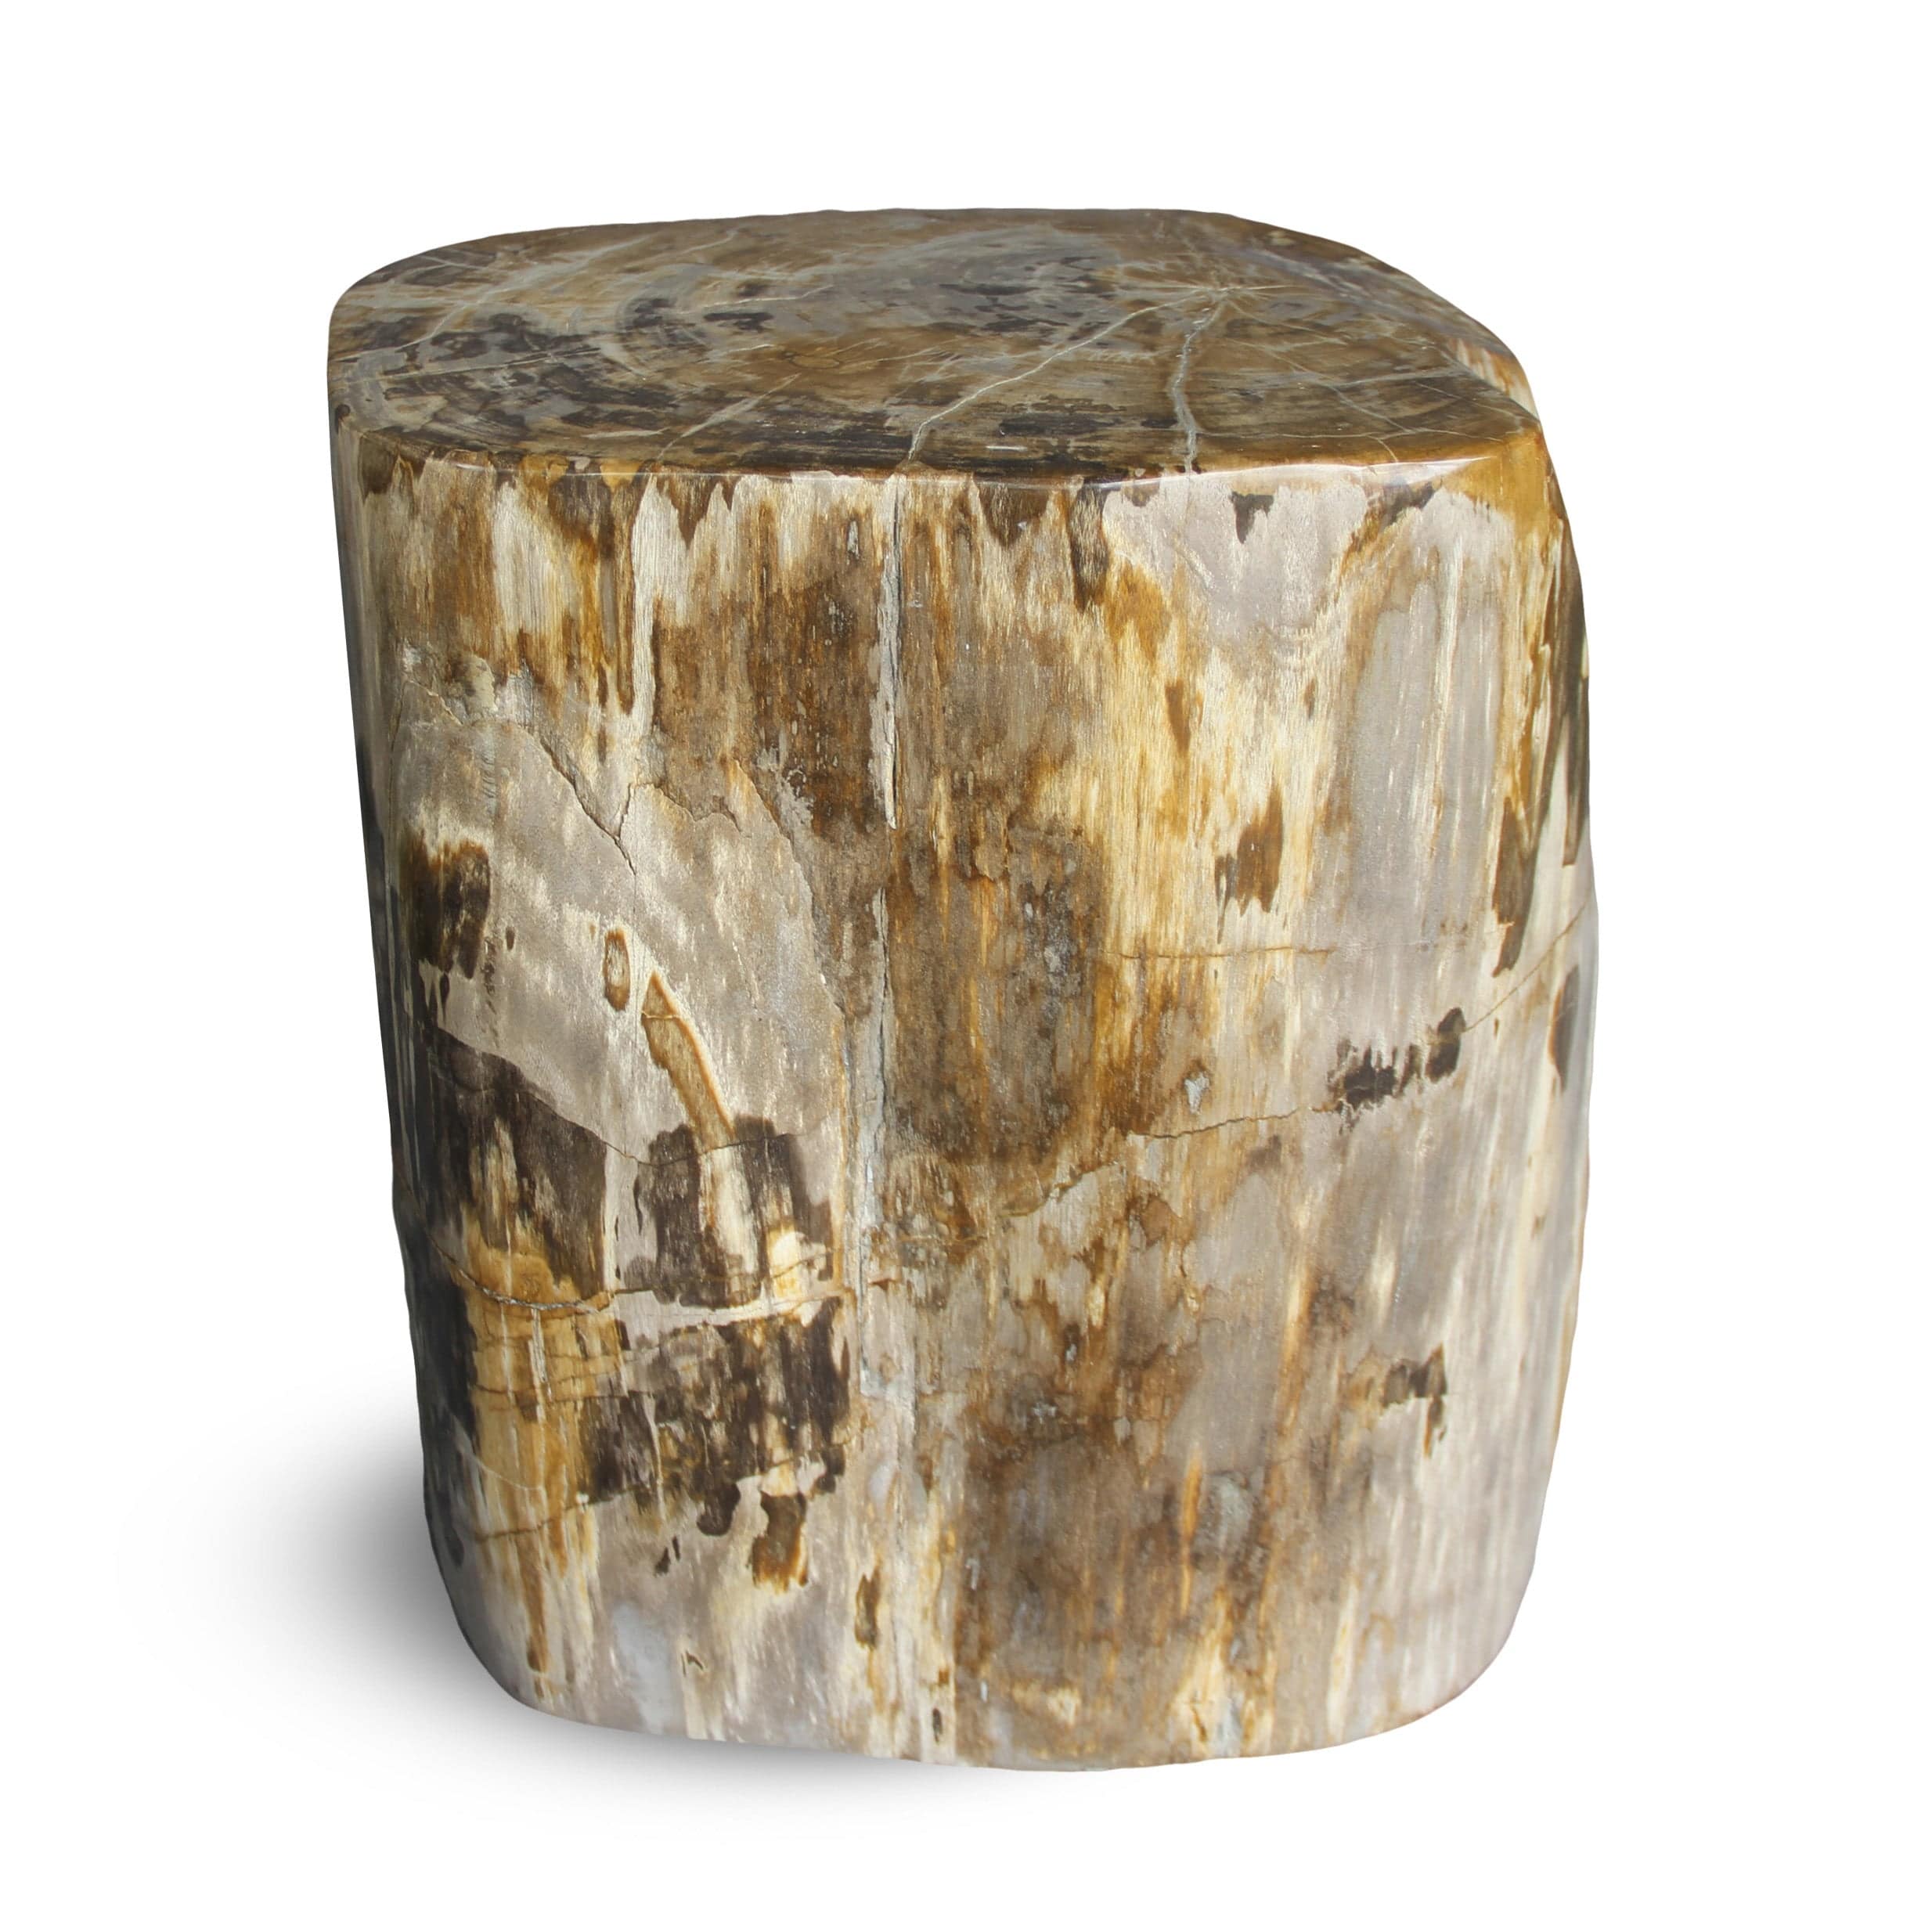 Kalifano Petrified Wood Petrified Wood Round Stump / Stool from Indonesia - 18" / 286 lbs PWS5200.004